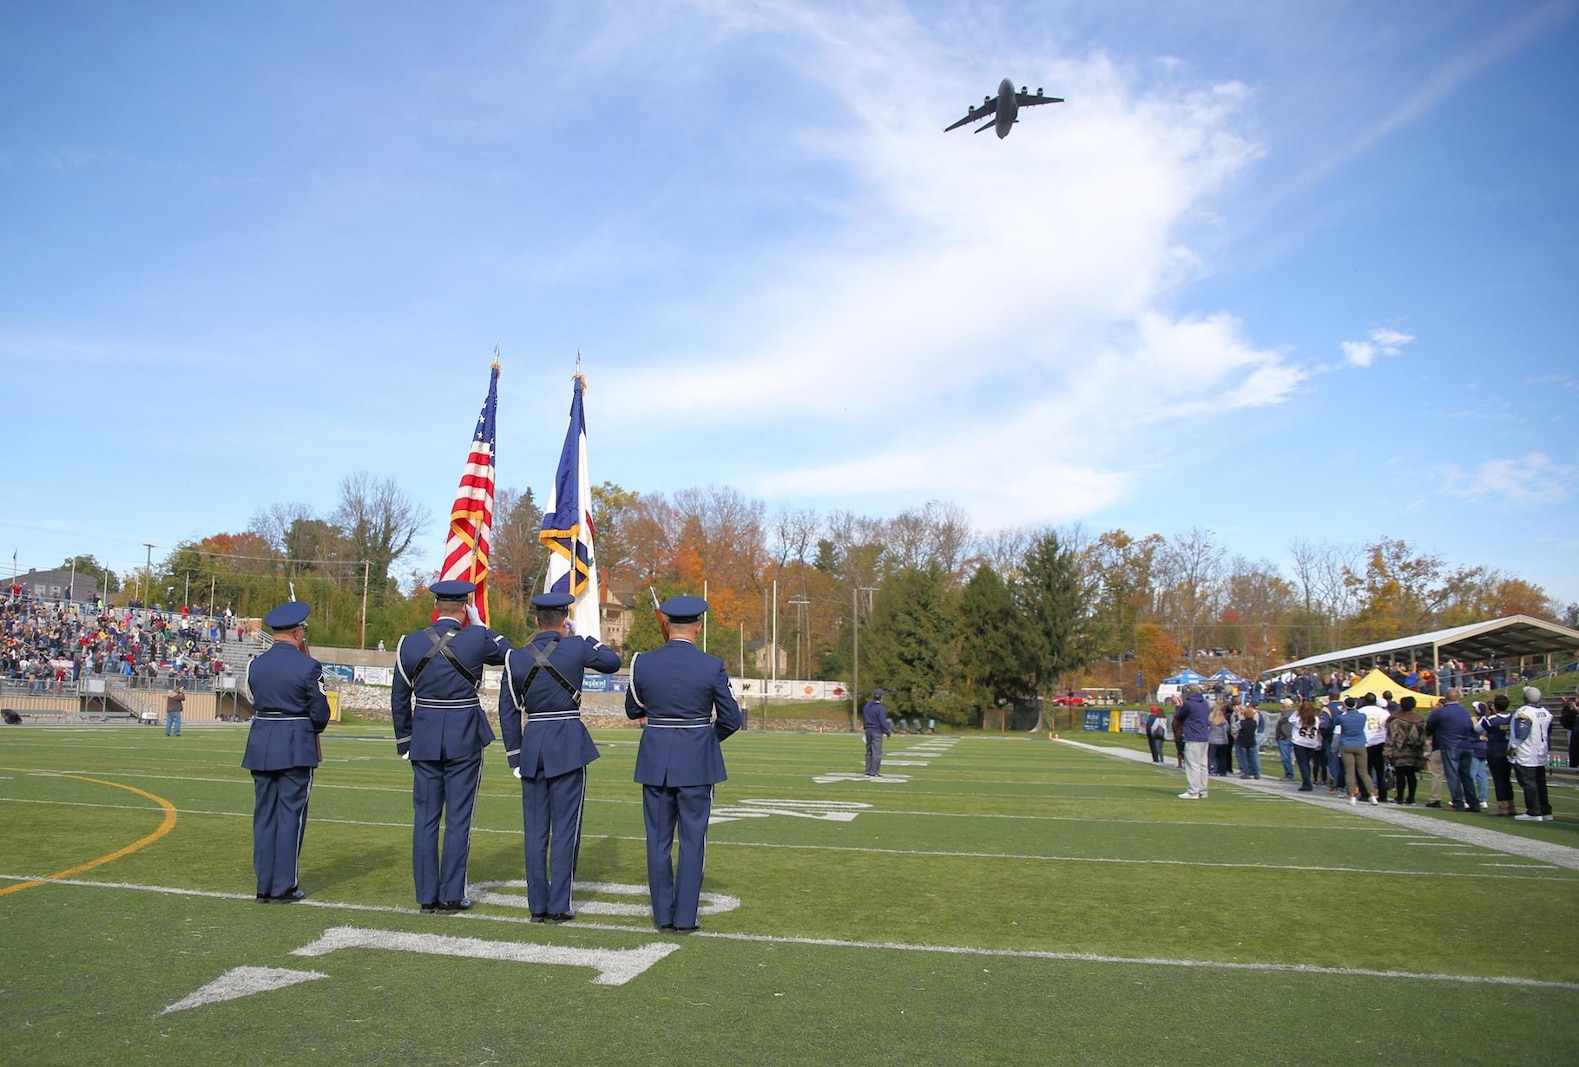 167th Airlift Wing Base Honor Guard, Shepherd University